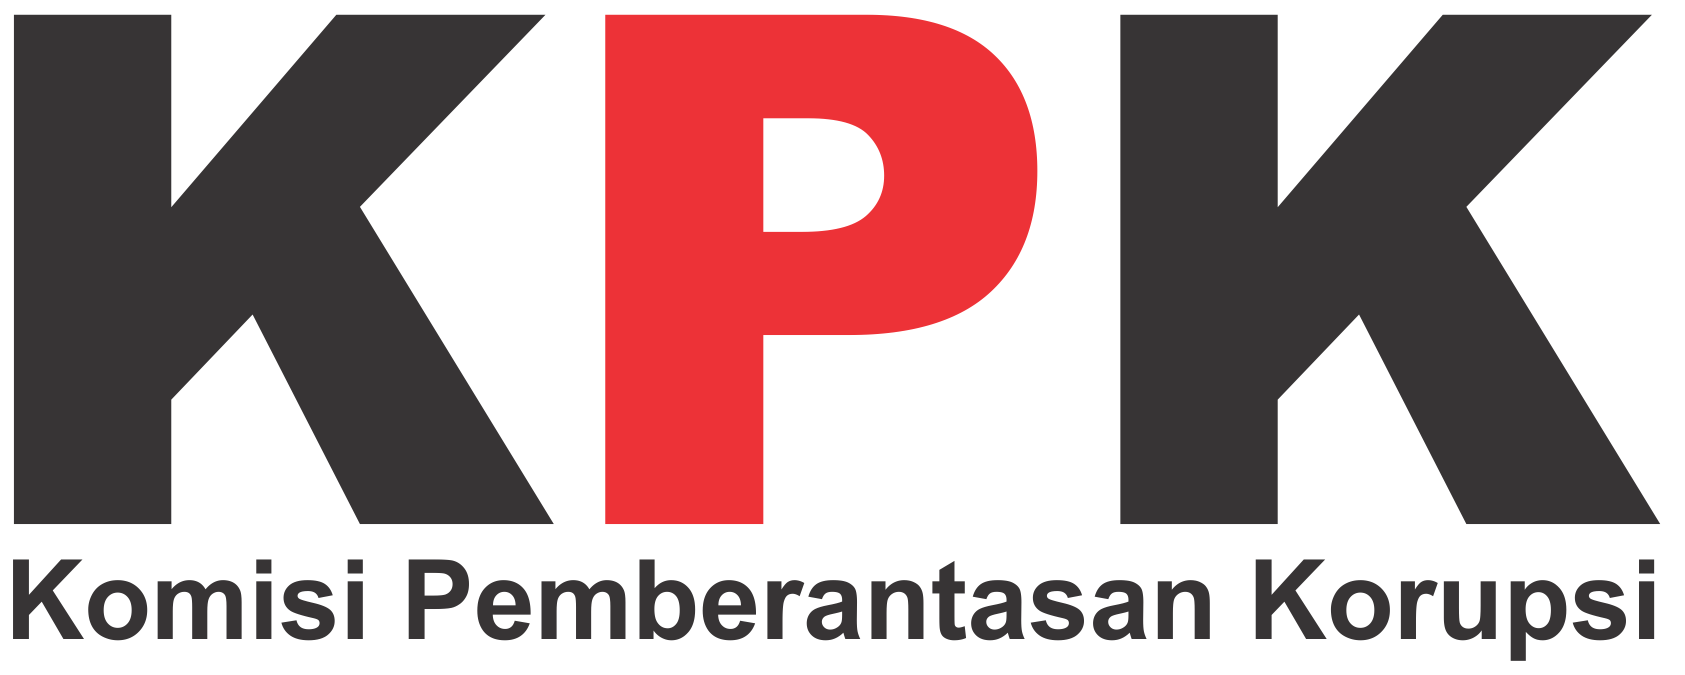 logo-kpk.png